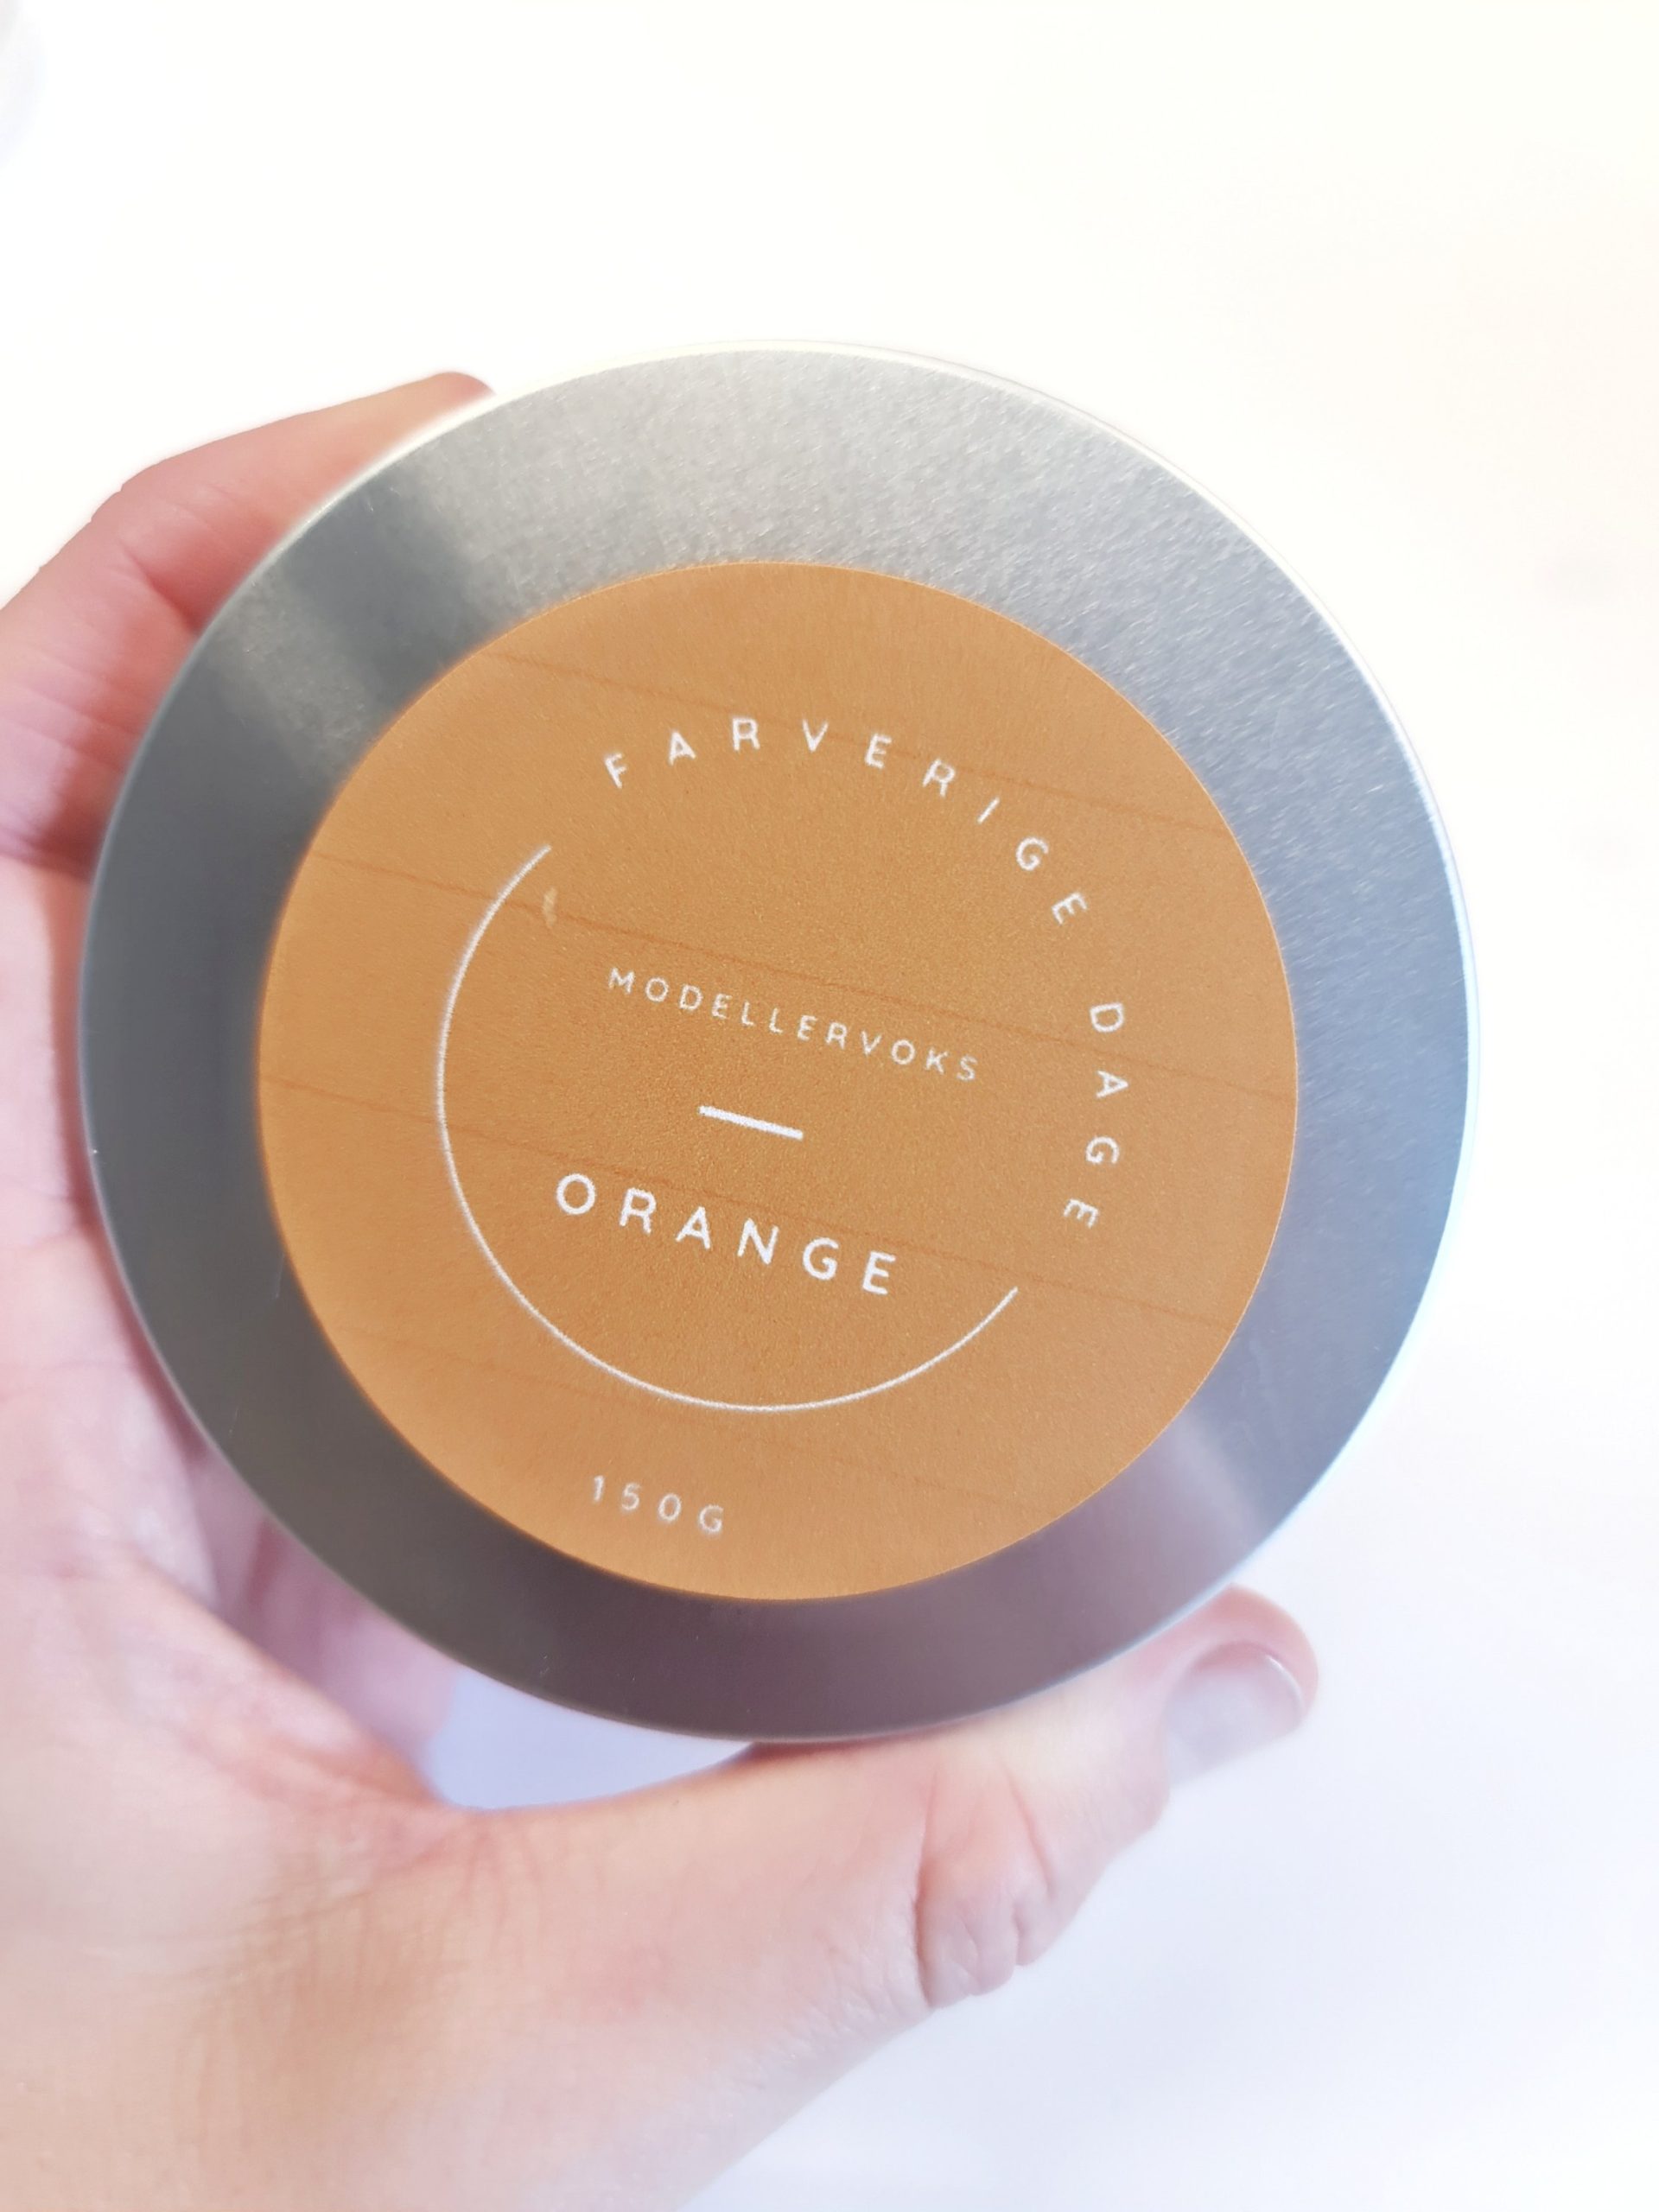 Orange modellervoks - Farverige